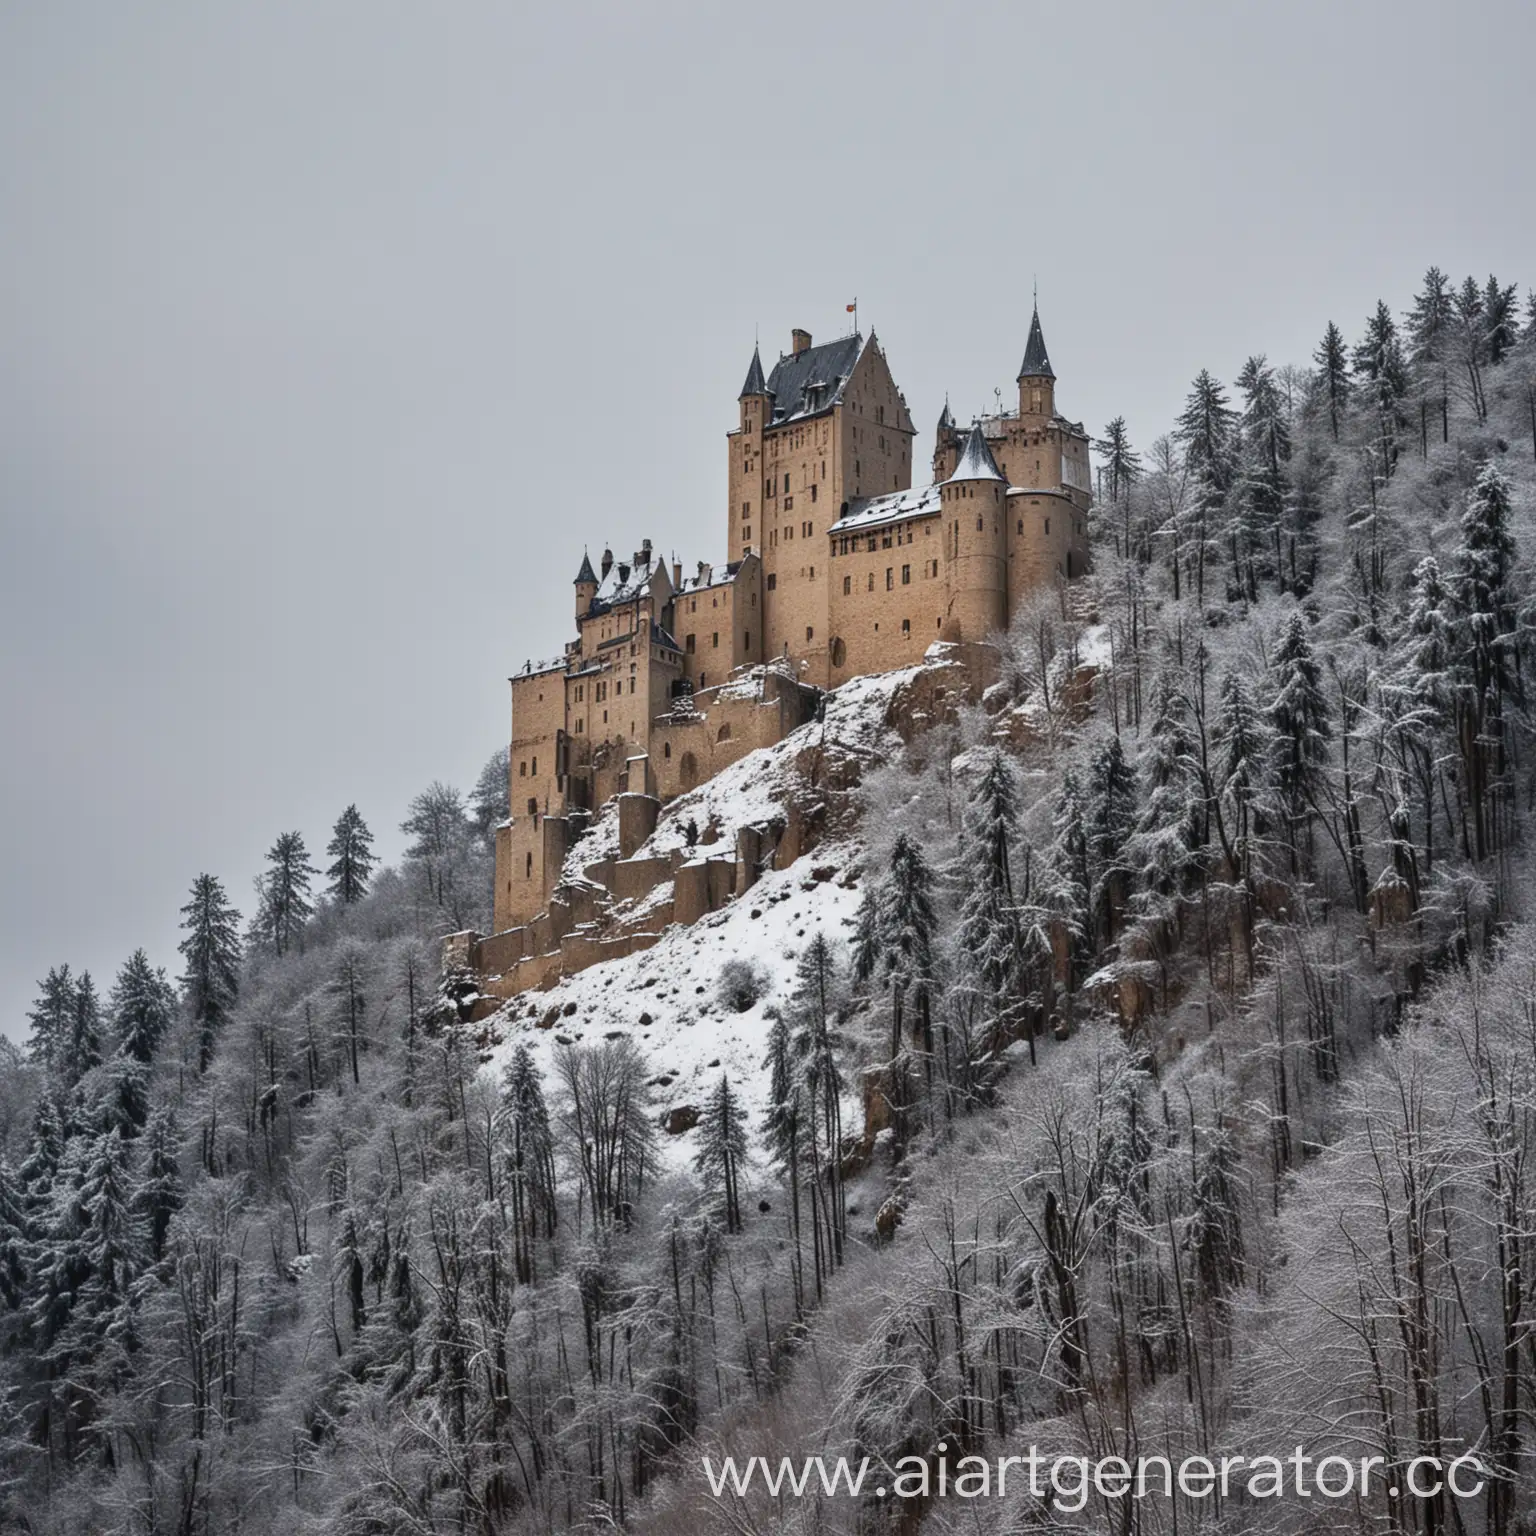 Snowy-Mountain-Landscape-with-Ancient-Castle